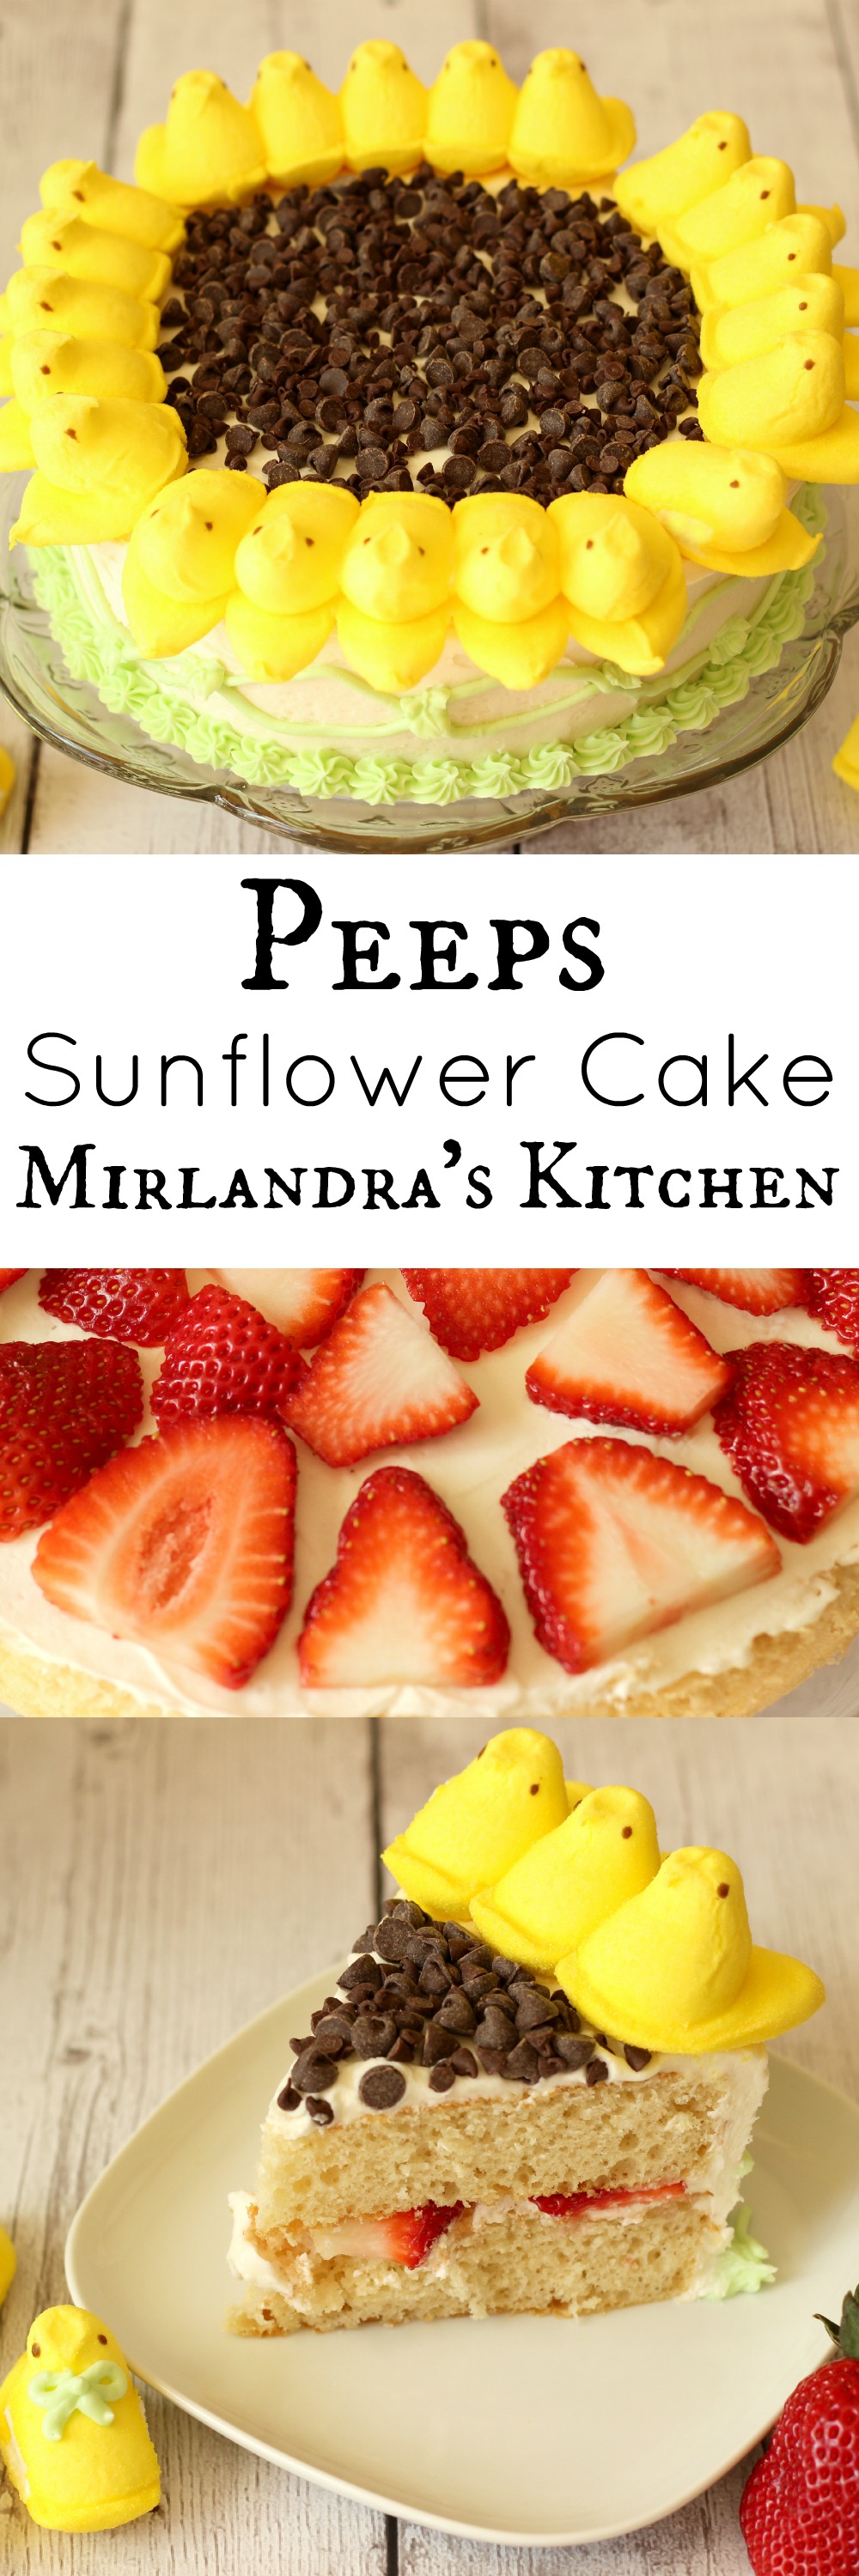 Peeps Sunflower Cake at Weekend Potluck #163 - Meet Penny